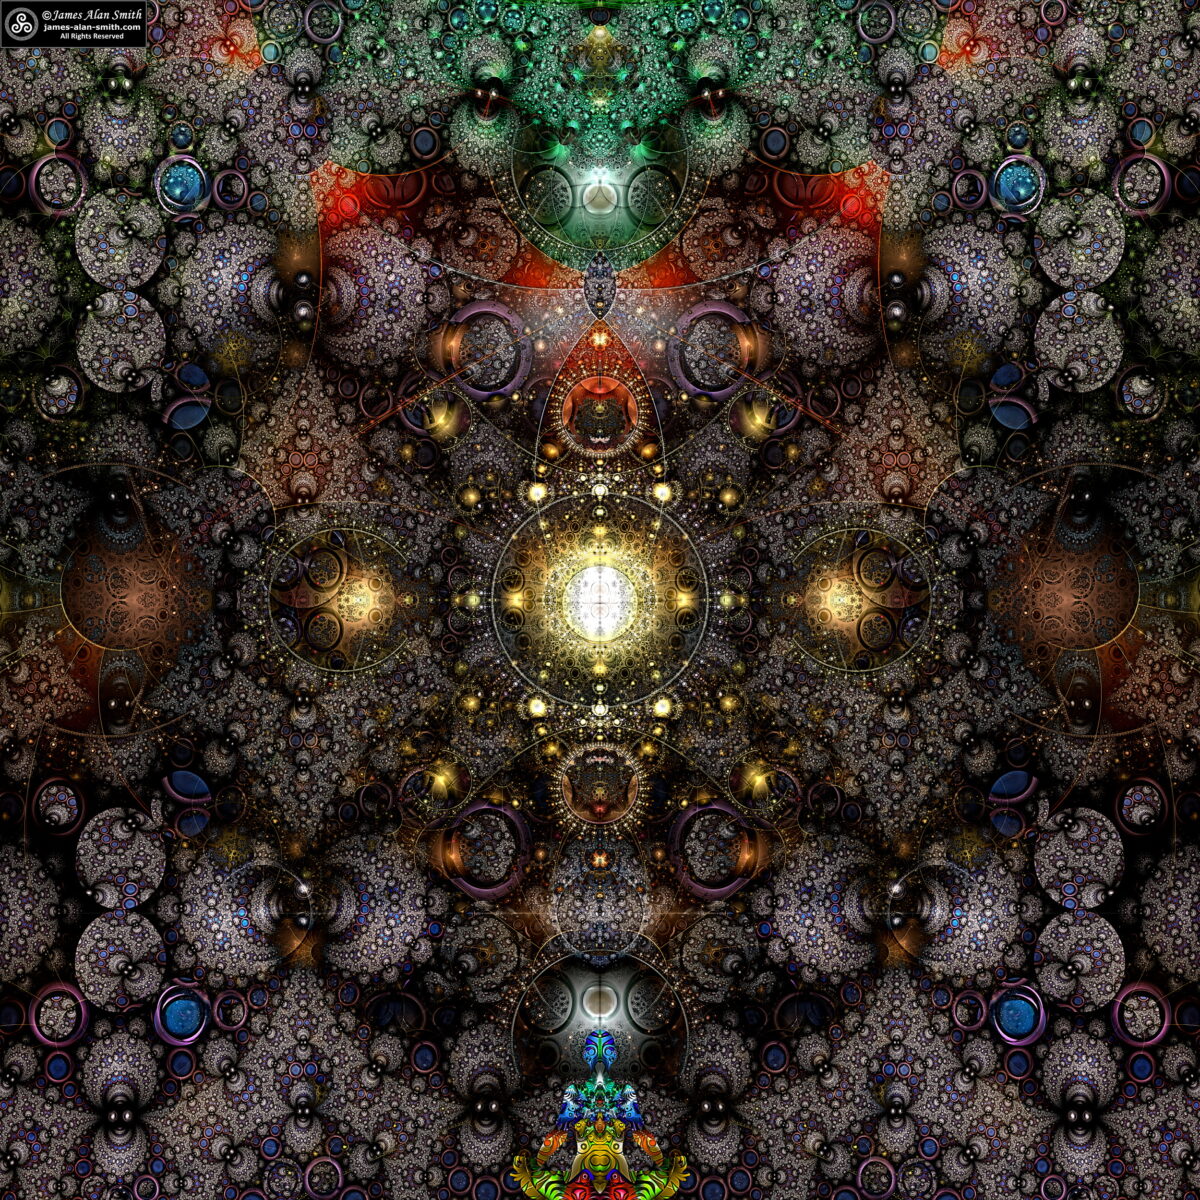 Meditations on Eternity: Artwork by James Alan